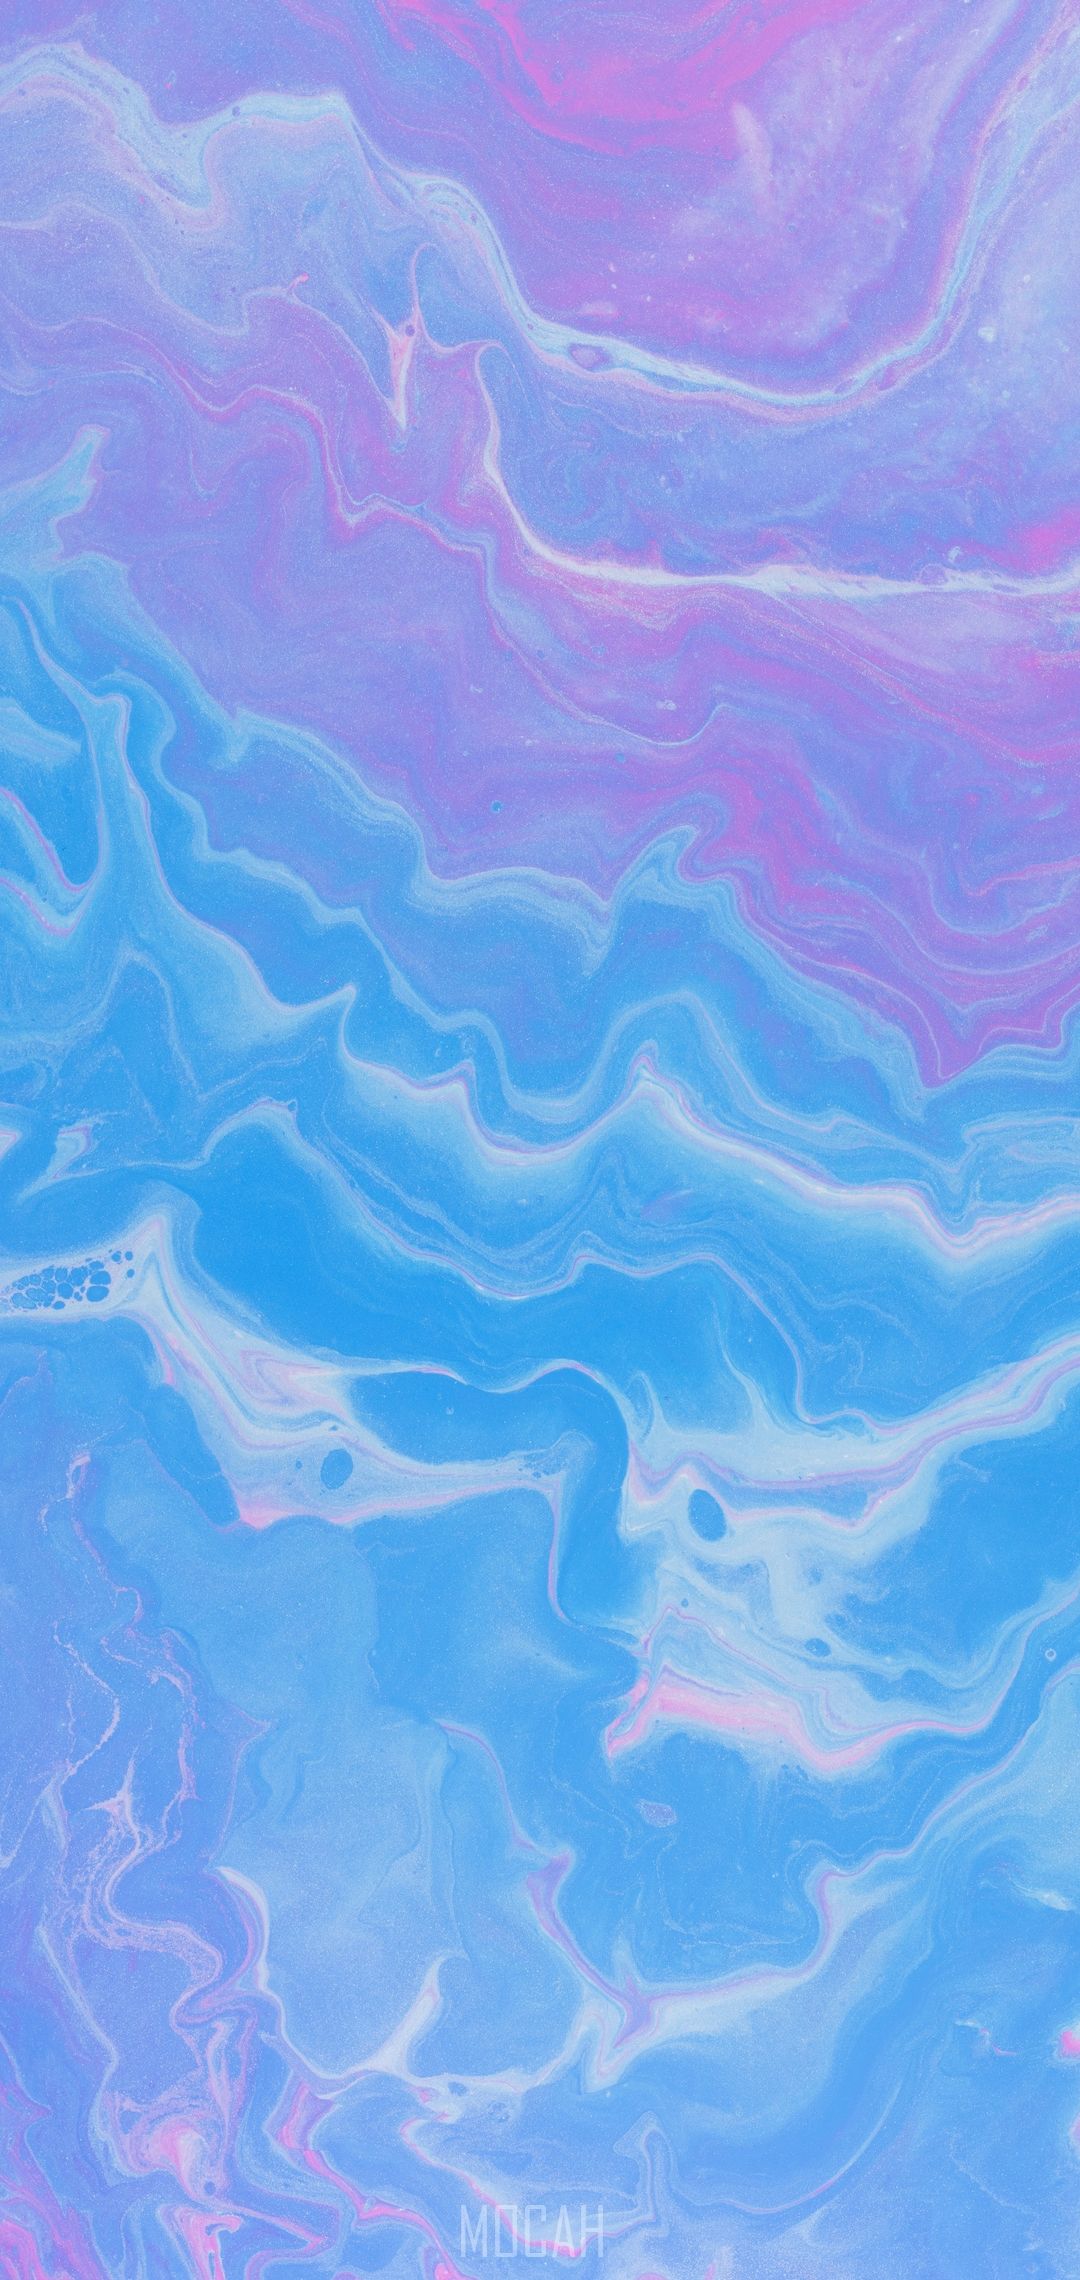 Aesthetic blue and purple marble background - Aqua